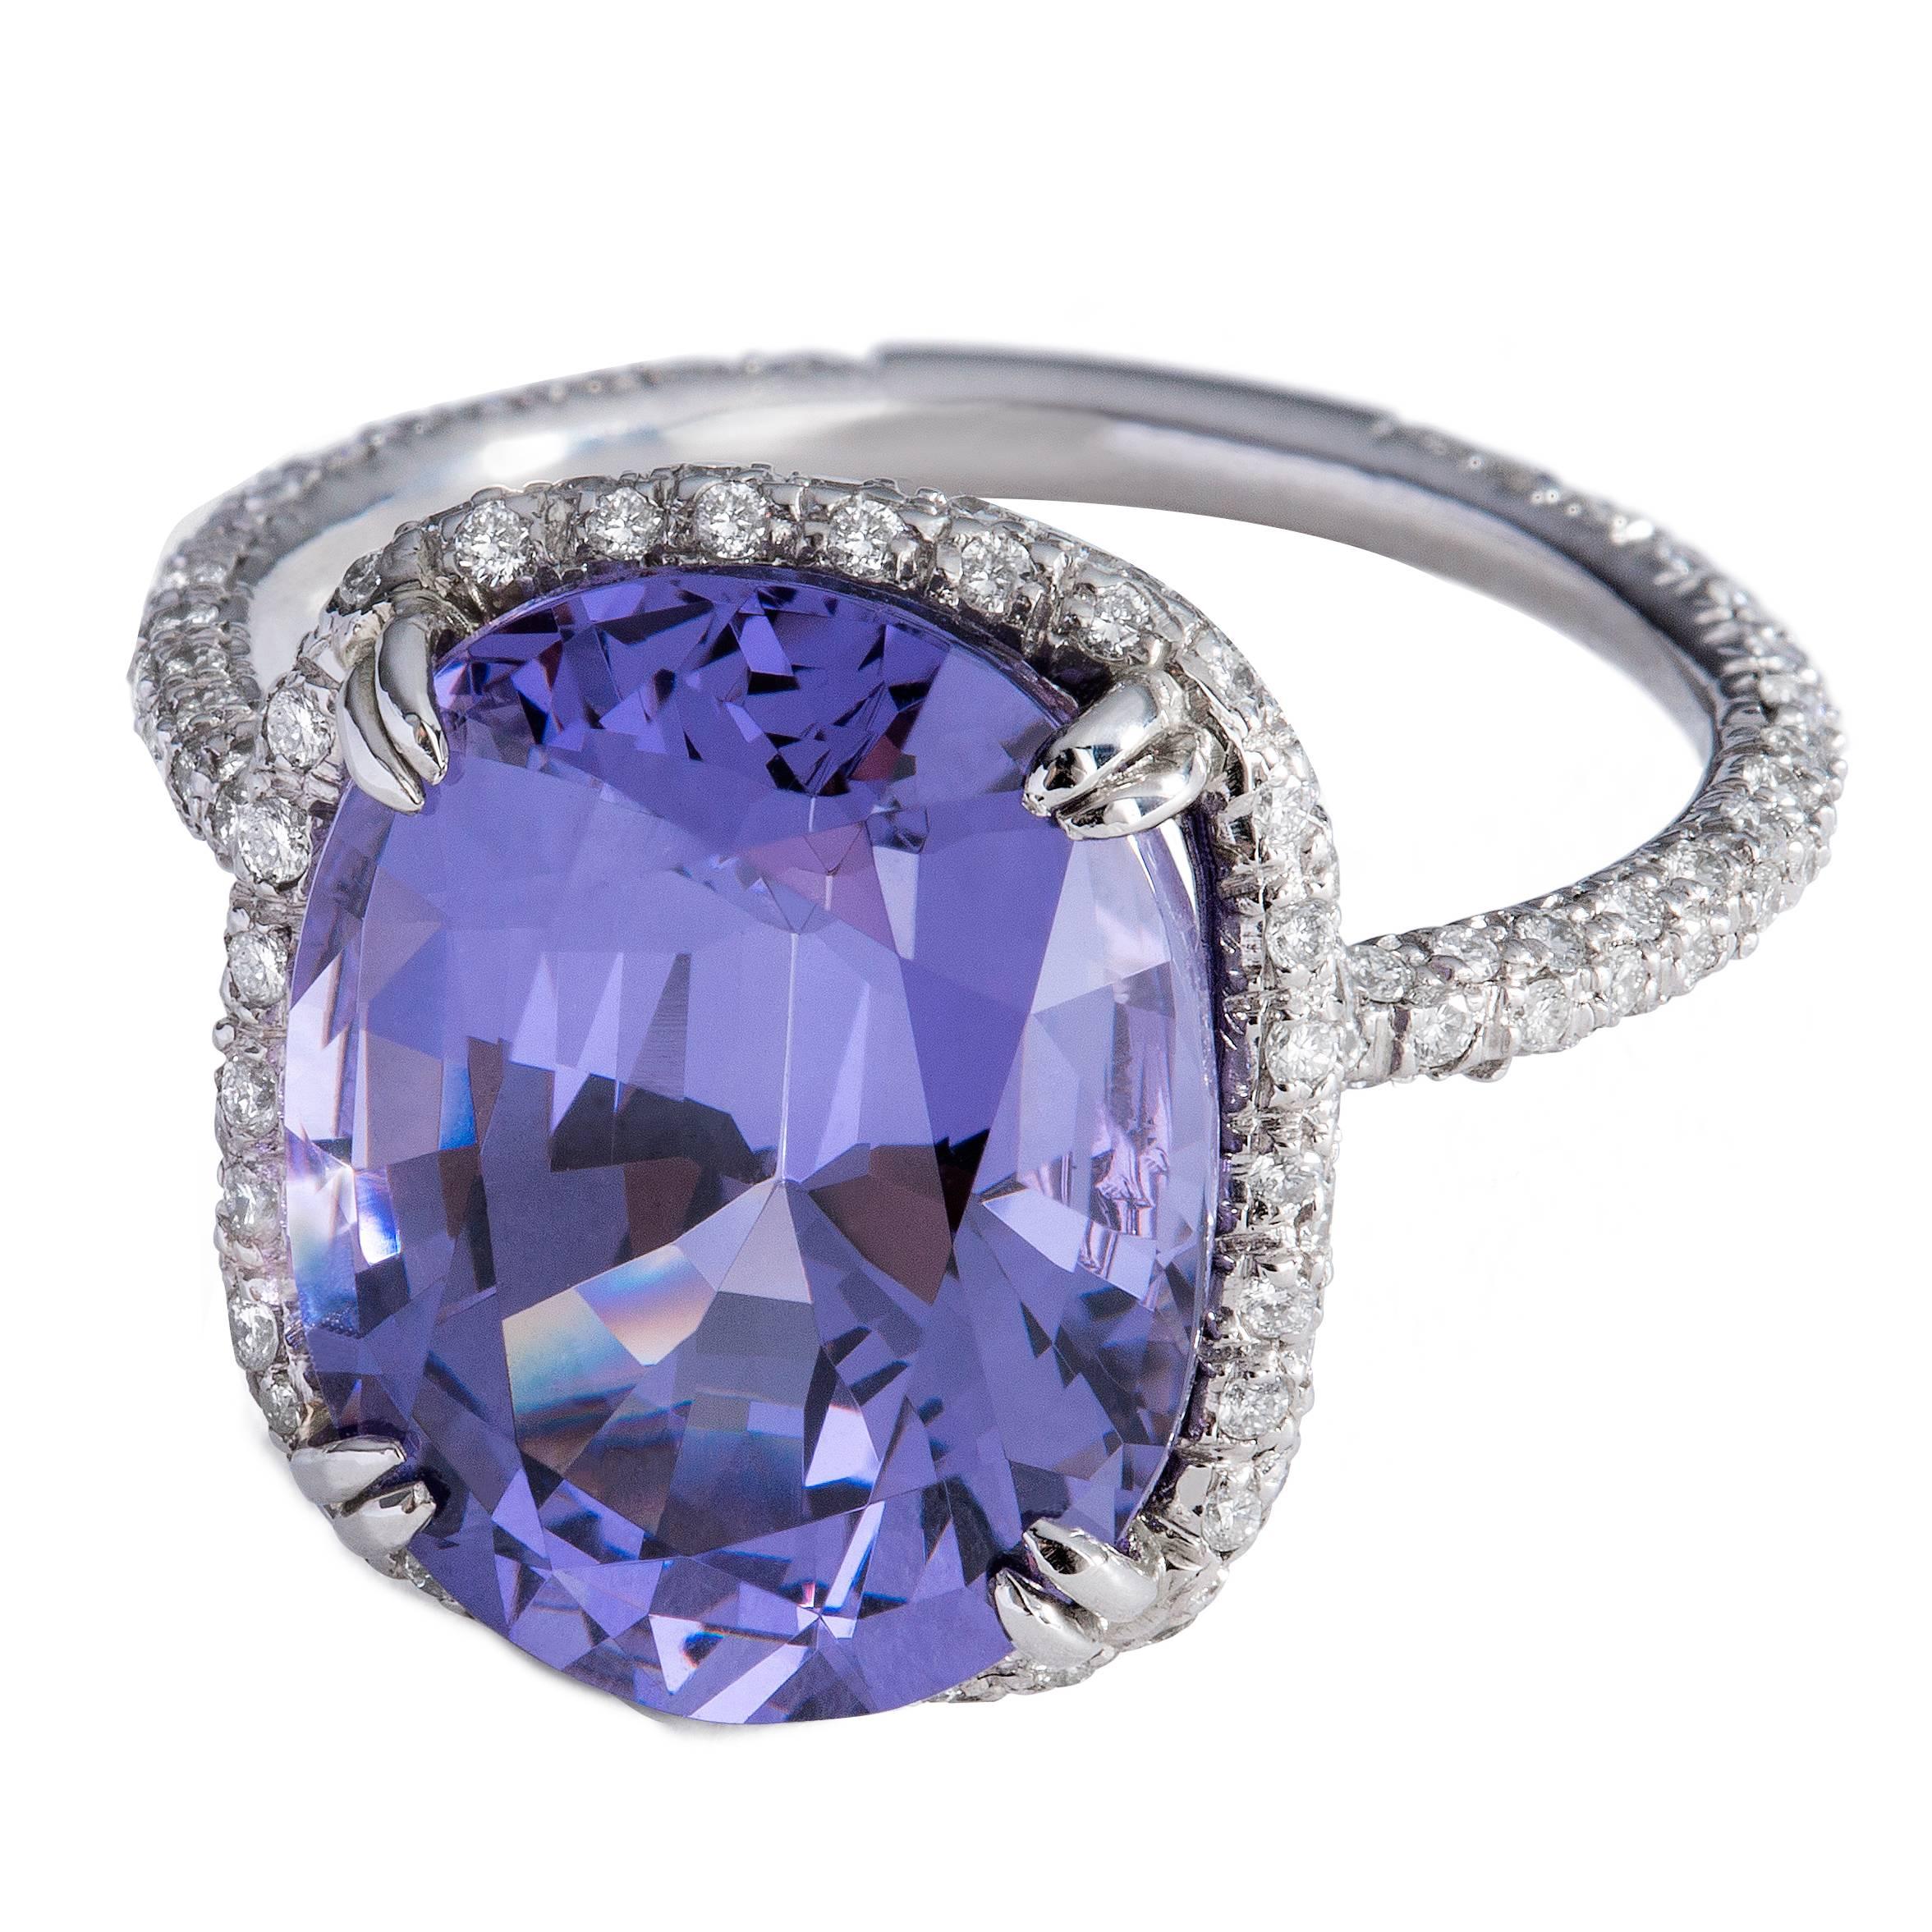 Rare oval violet spinel Diamond Platinum Cocktail ring 